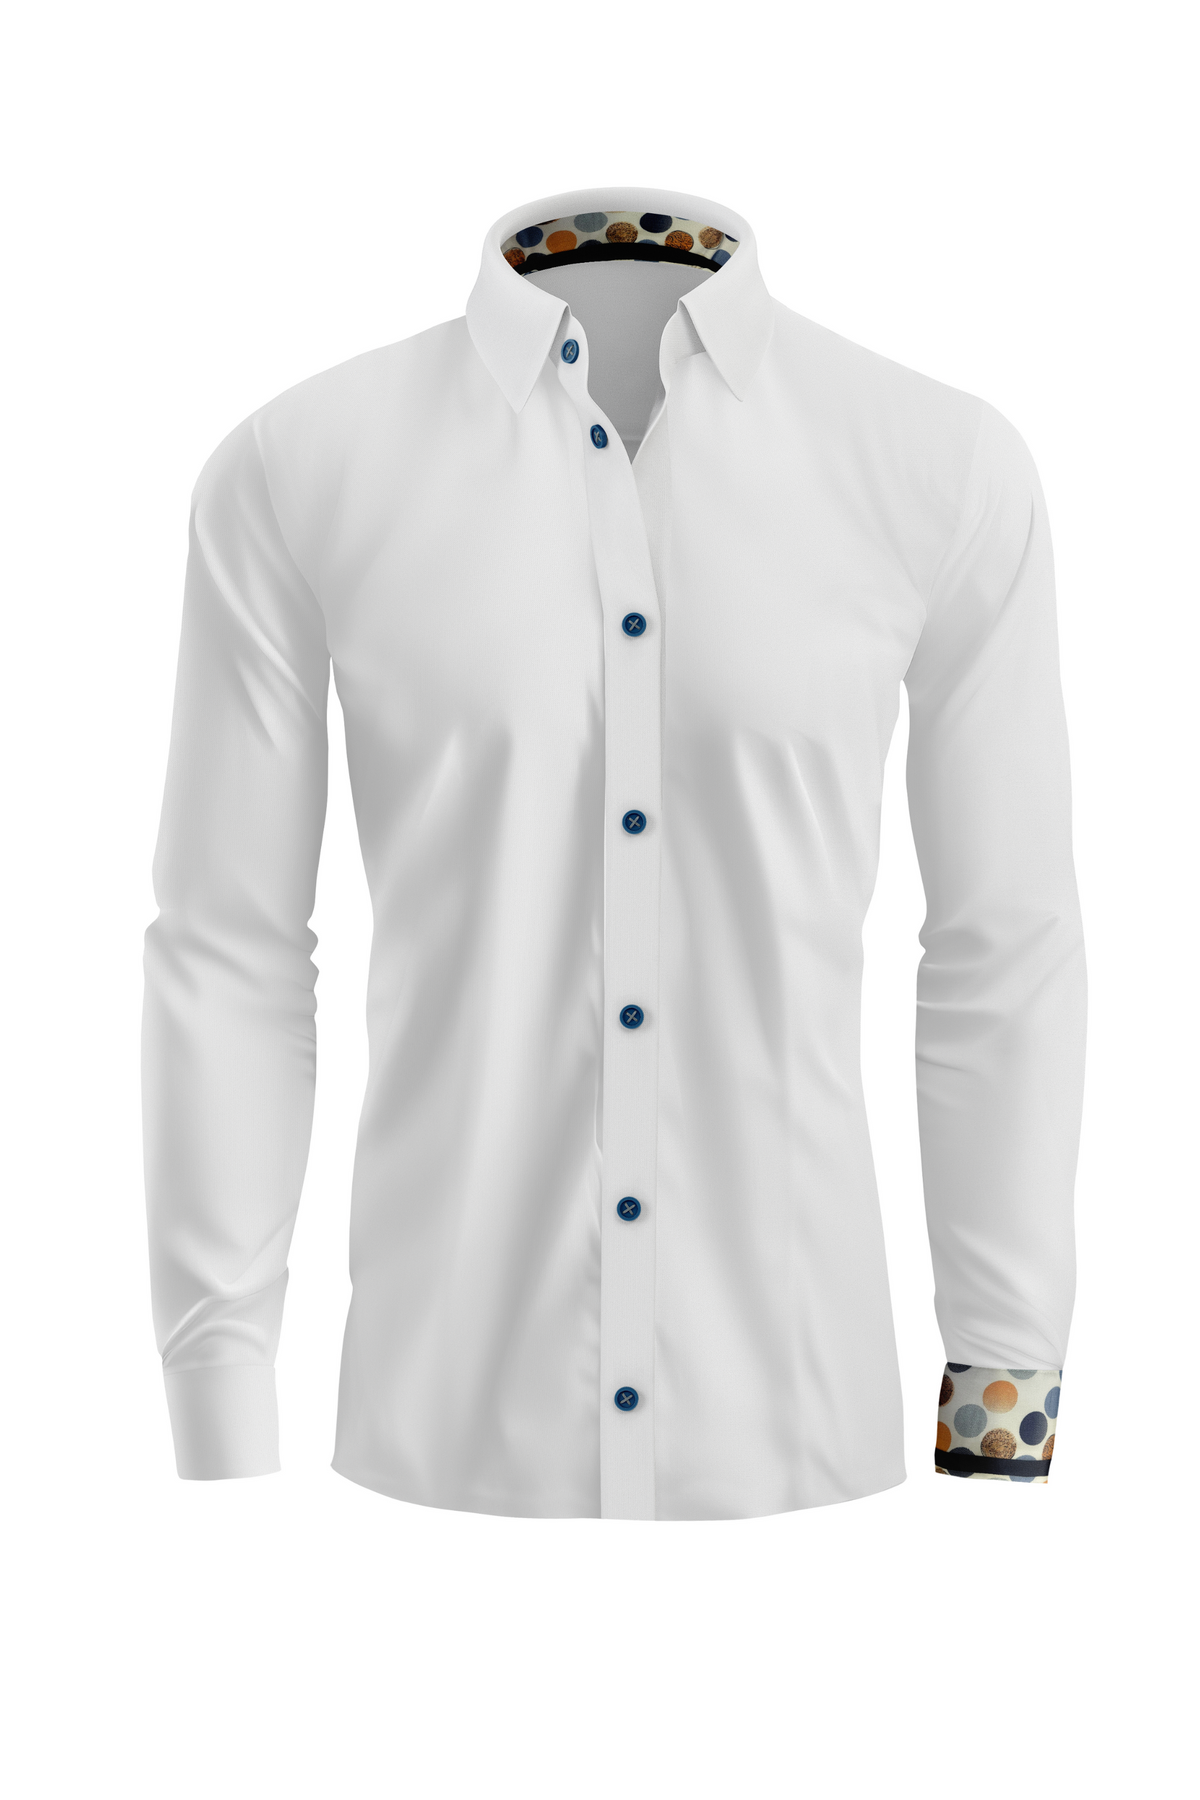 Vercini White Casual dress Shirt